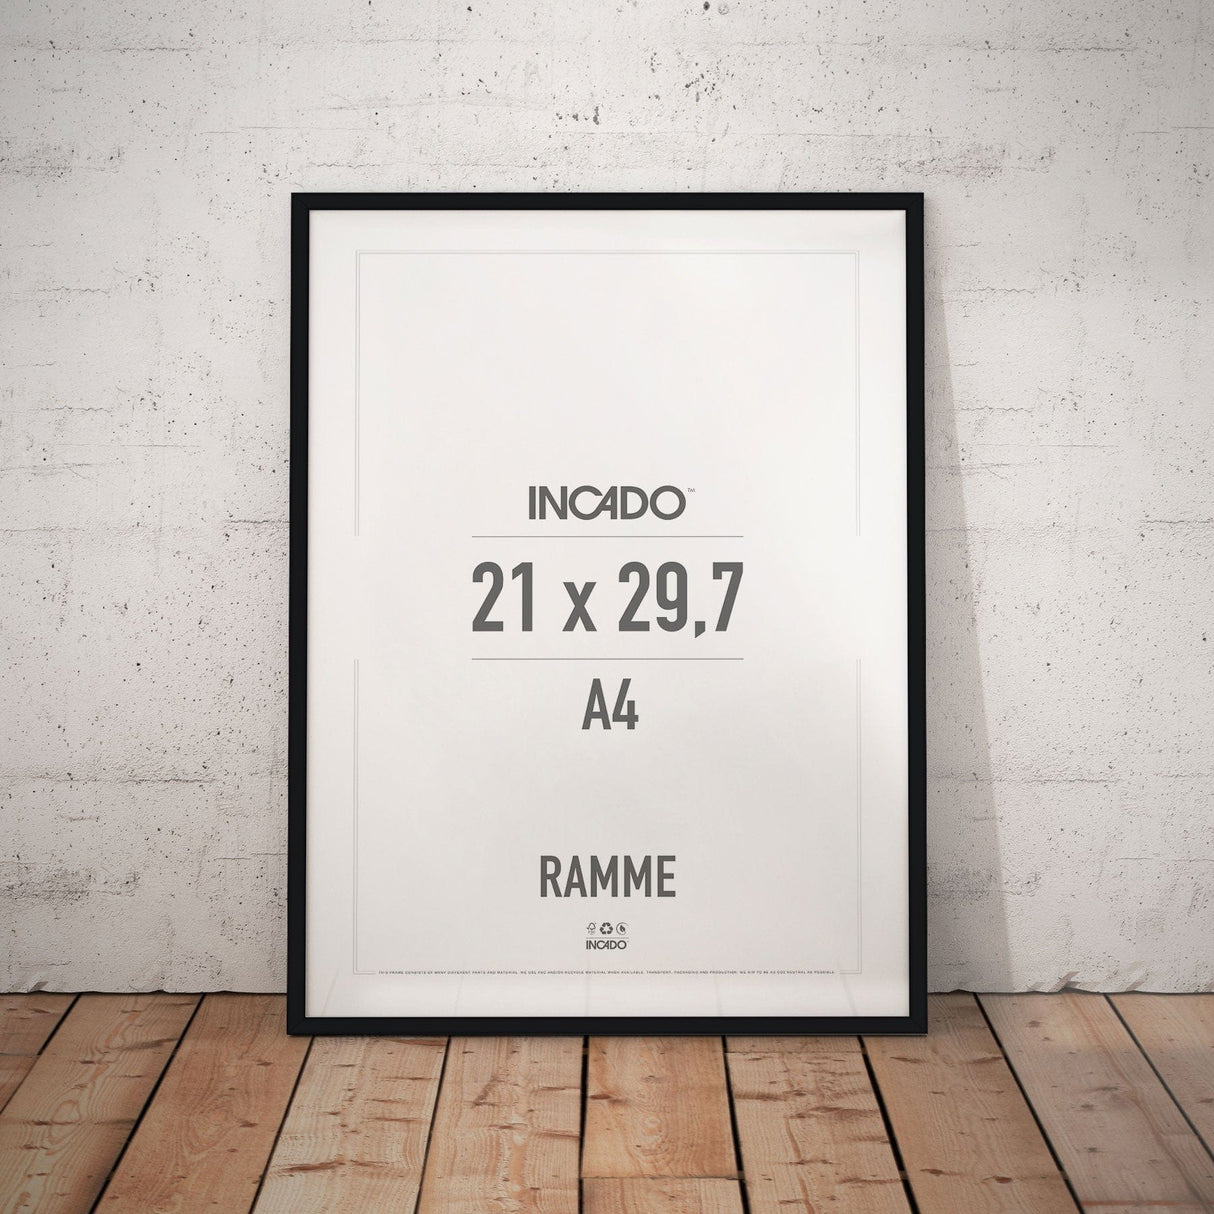 Sort Ramme - Incado NordicLine - 21 x 29,7 cm / A4